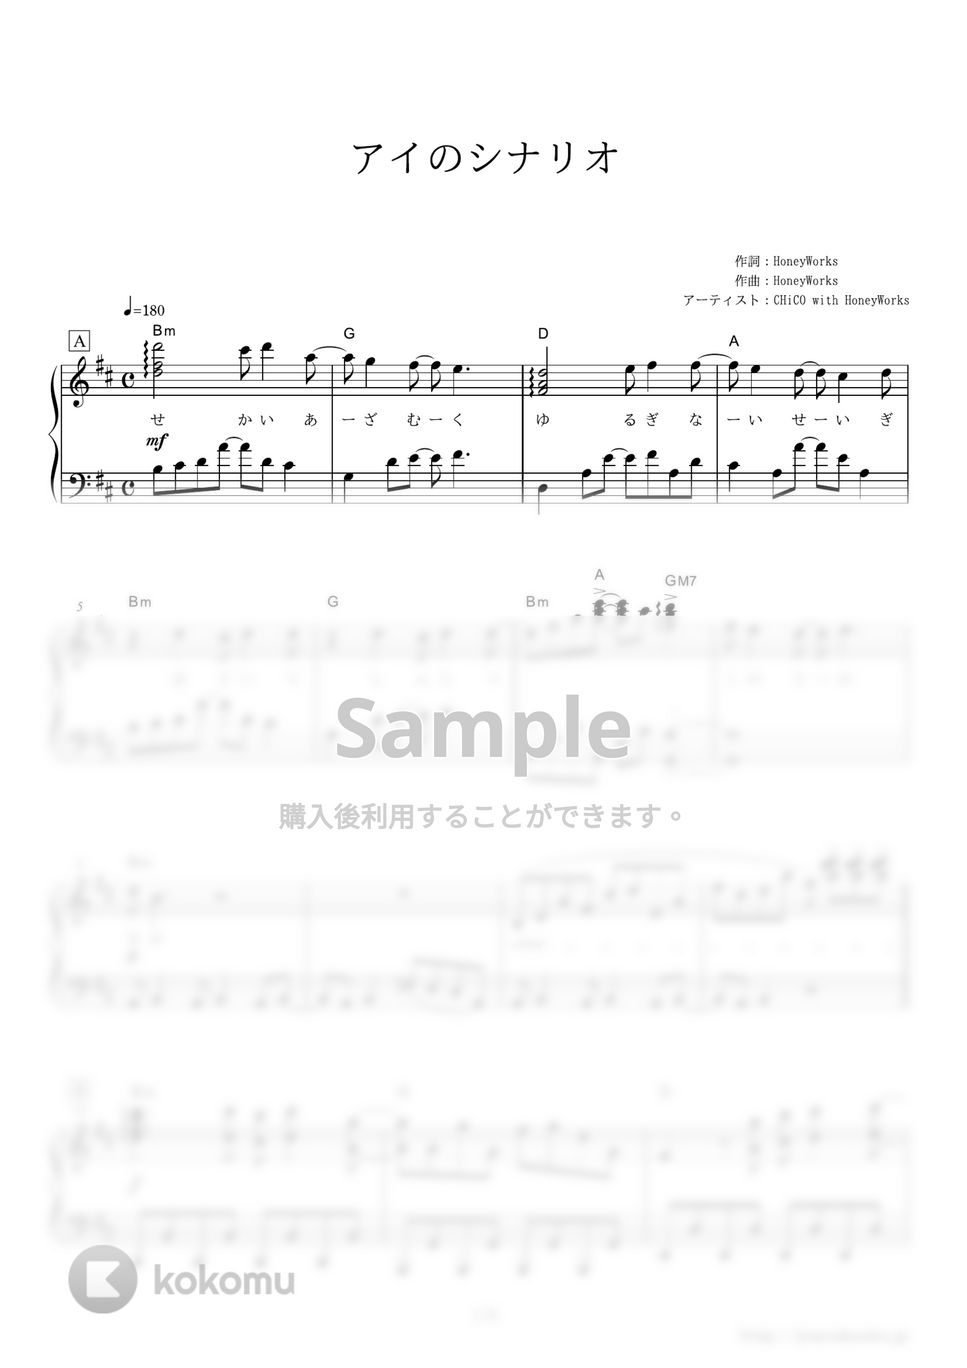 CHiCO with HoneyWorks - アイのシナリオ (テレビアニメ『まじっく快斗1412』オープニングテーマ) by ピアノの本棚